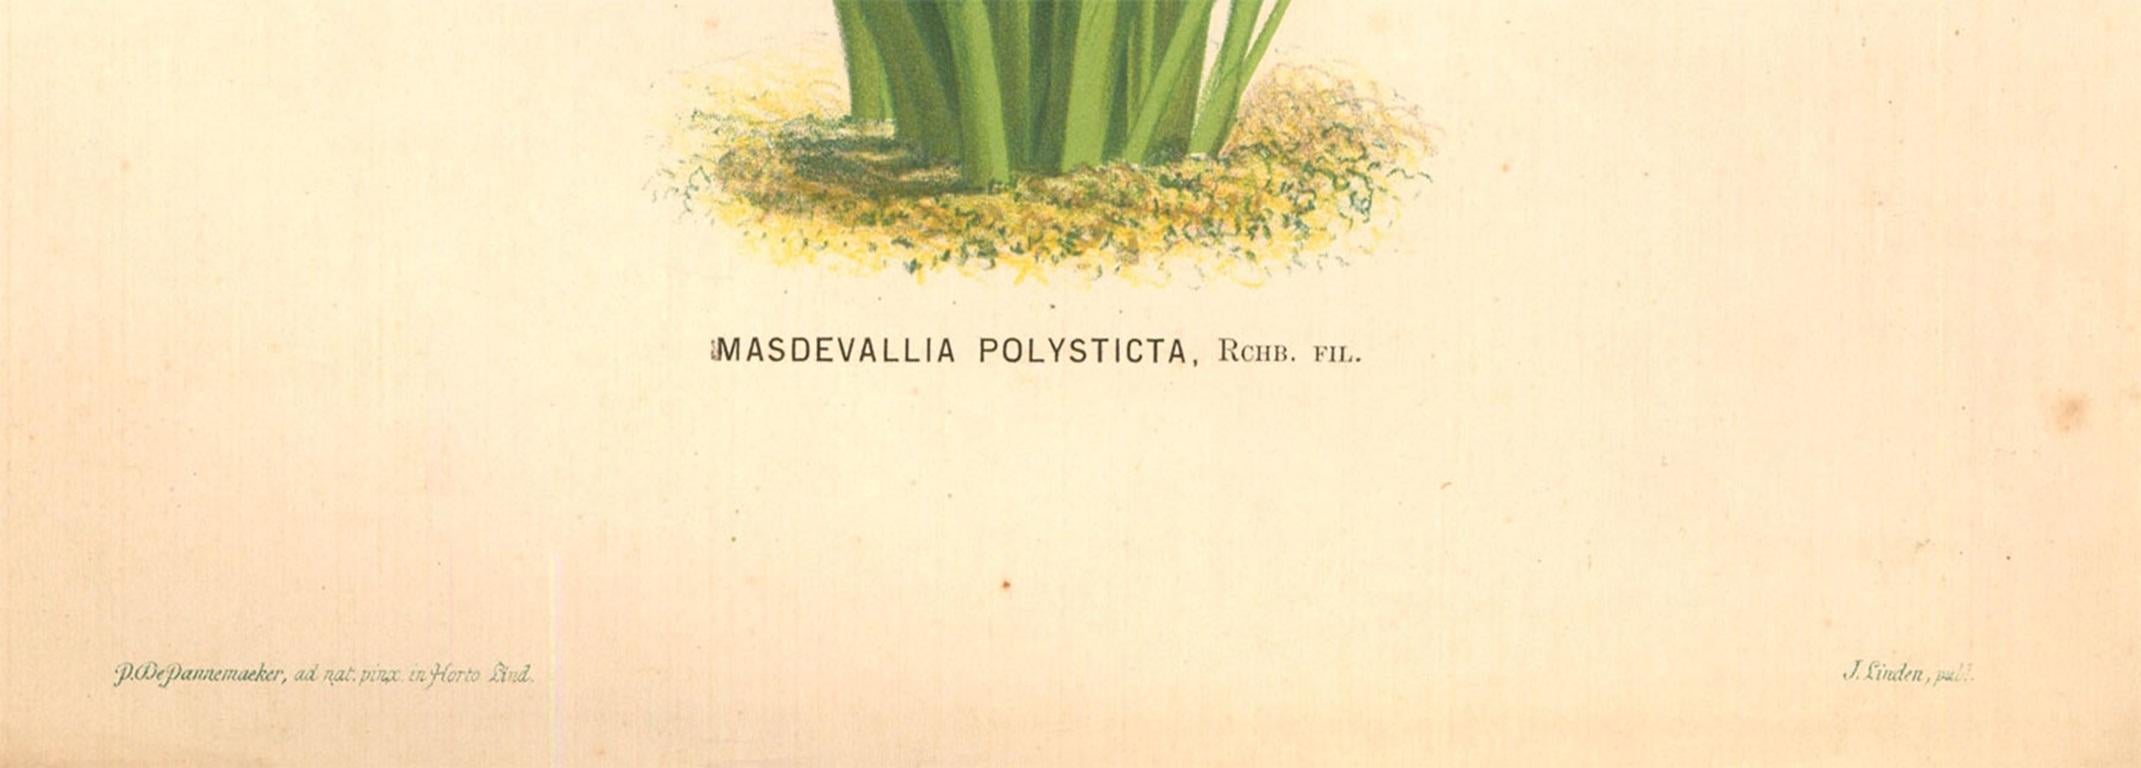 Peter De Pannemaeker - Mid 19th Century Lithograph, Masdevallia Polysticta For Sale 2